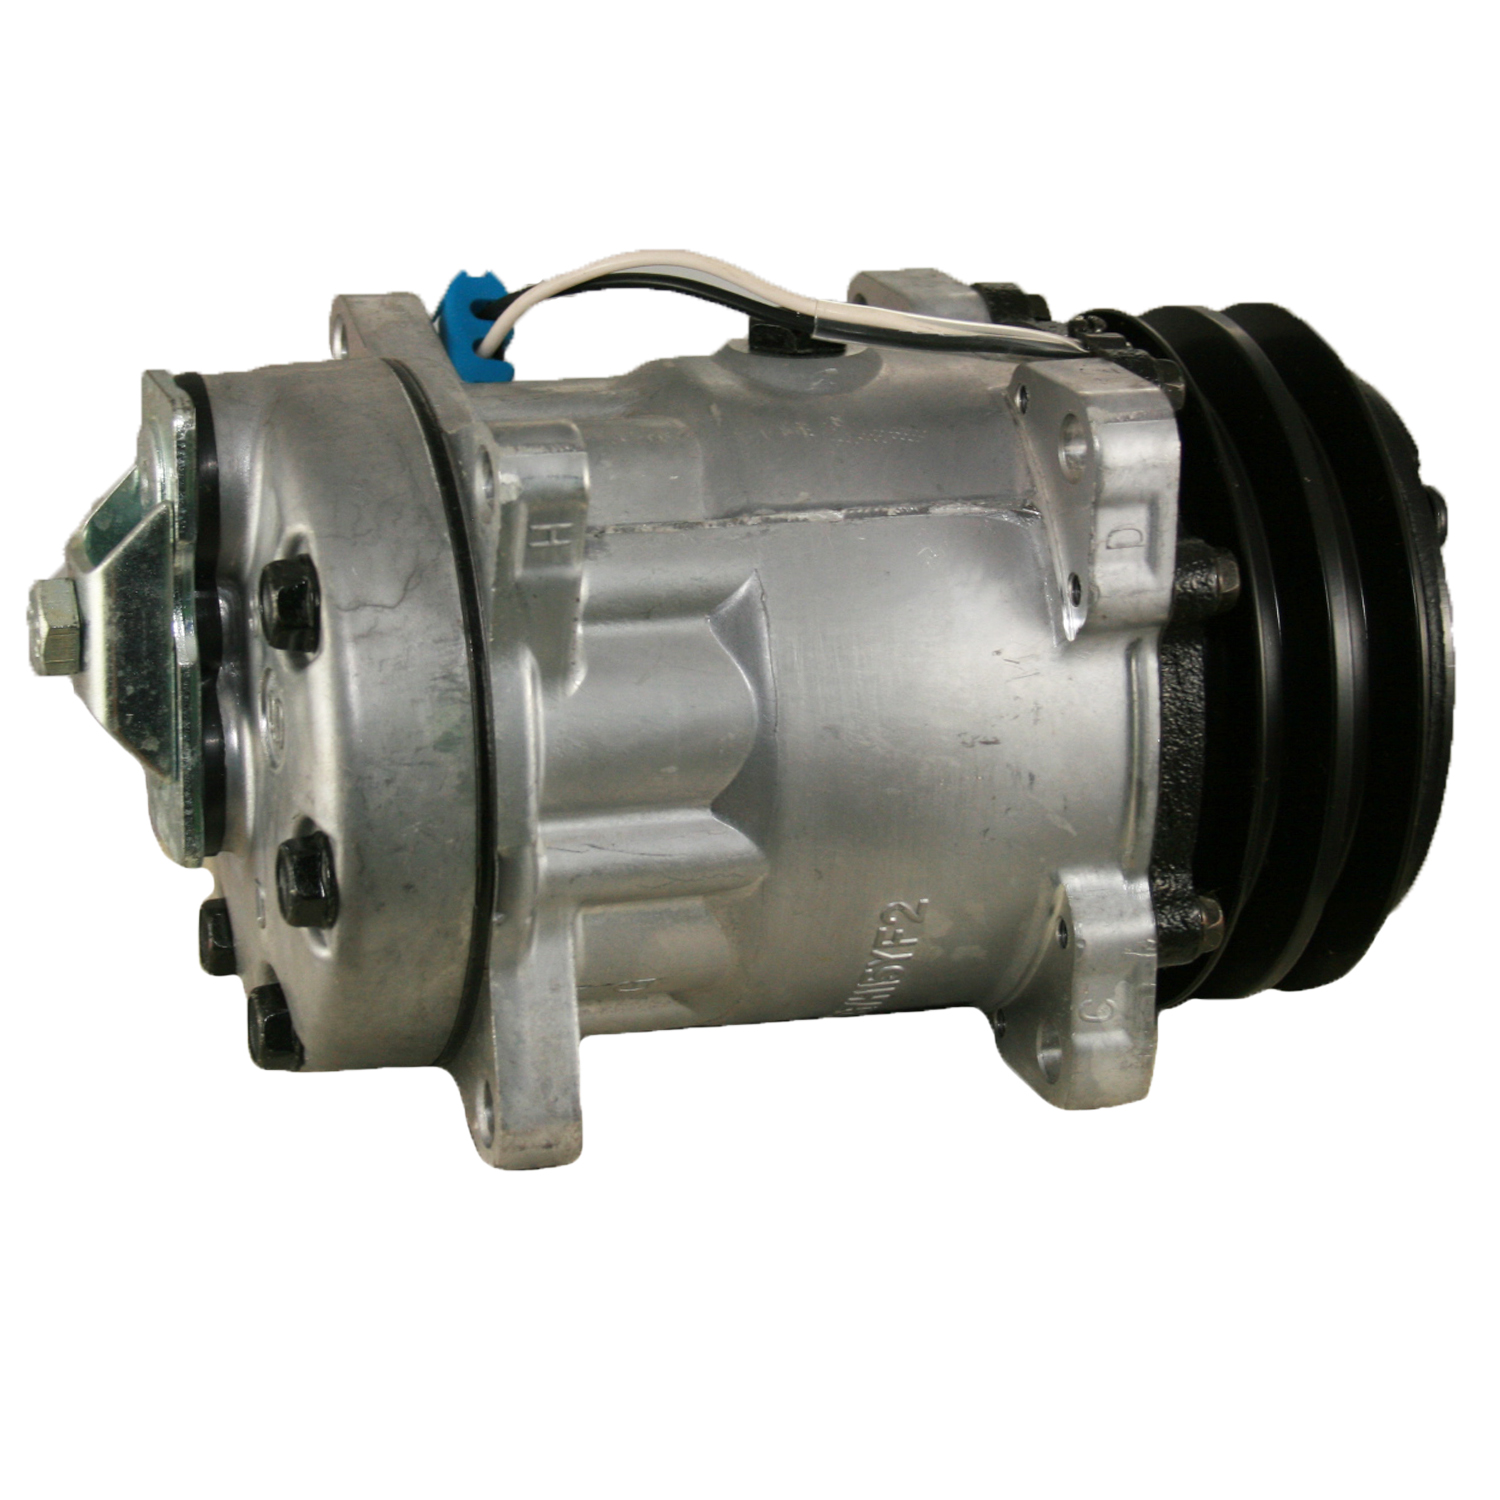 TCW Compressor 40552.201NEW New Product Image field_60b6a13a6e67c